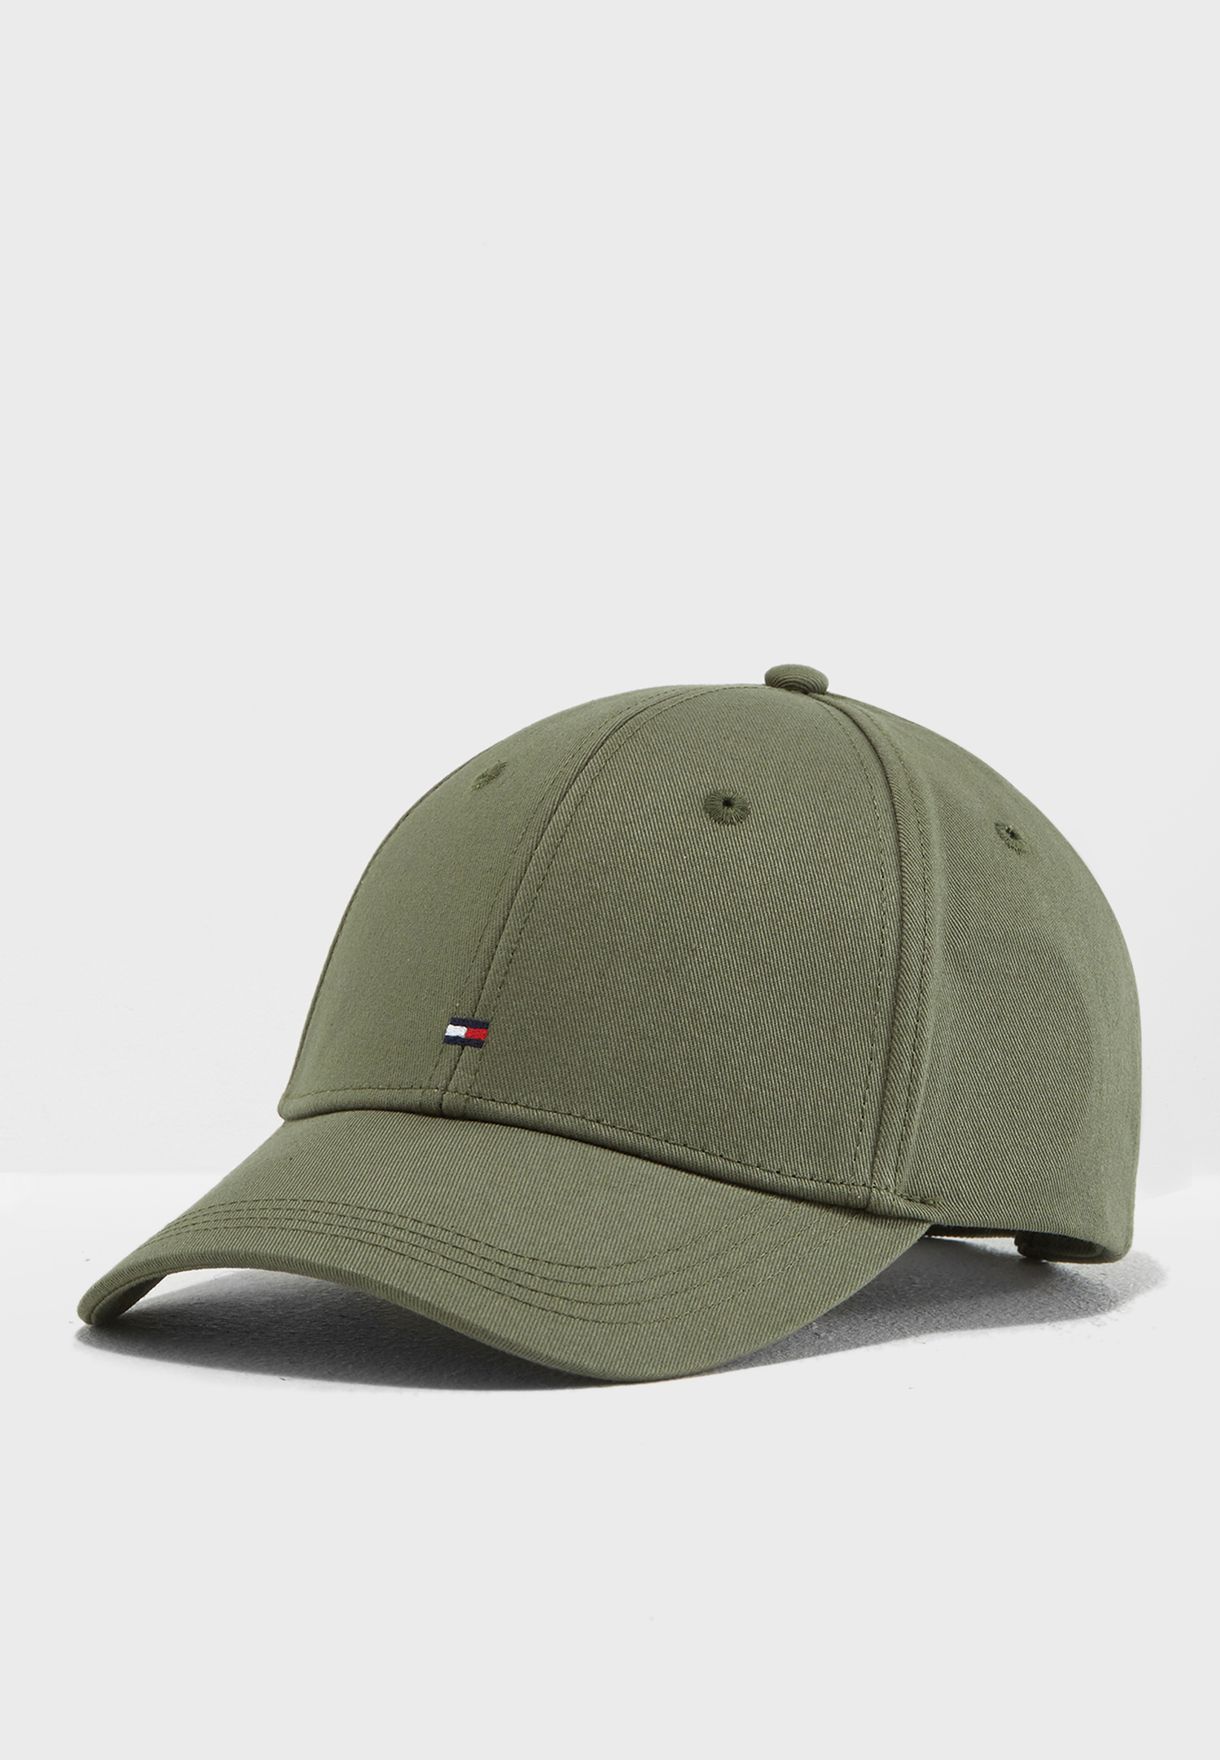 tommy hilfiger green hat